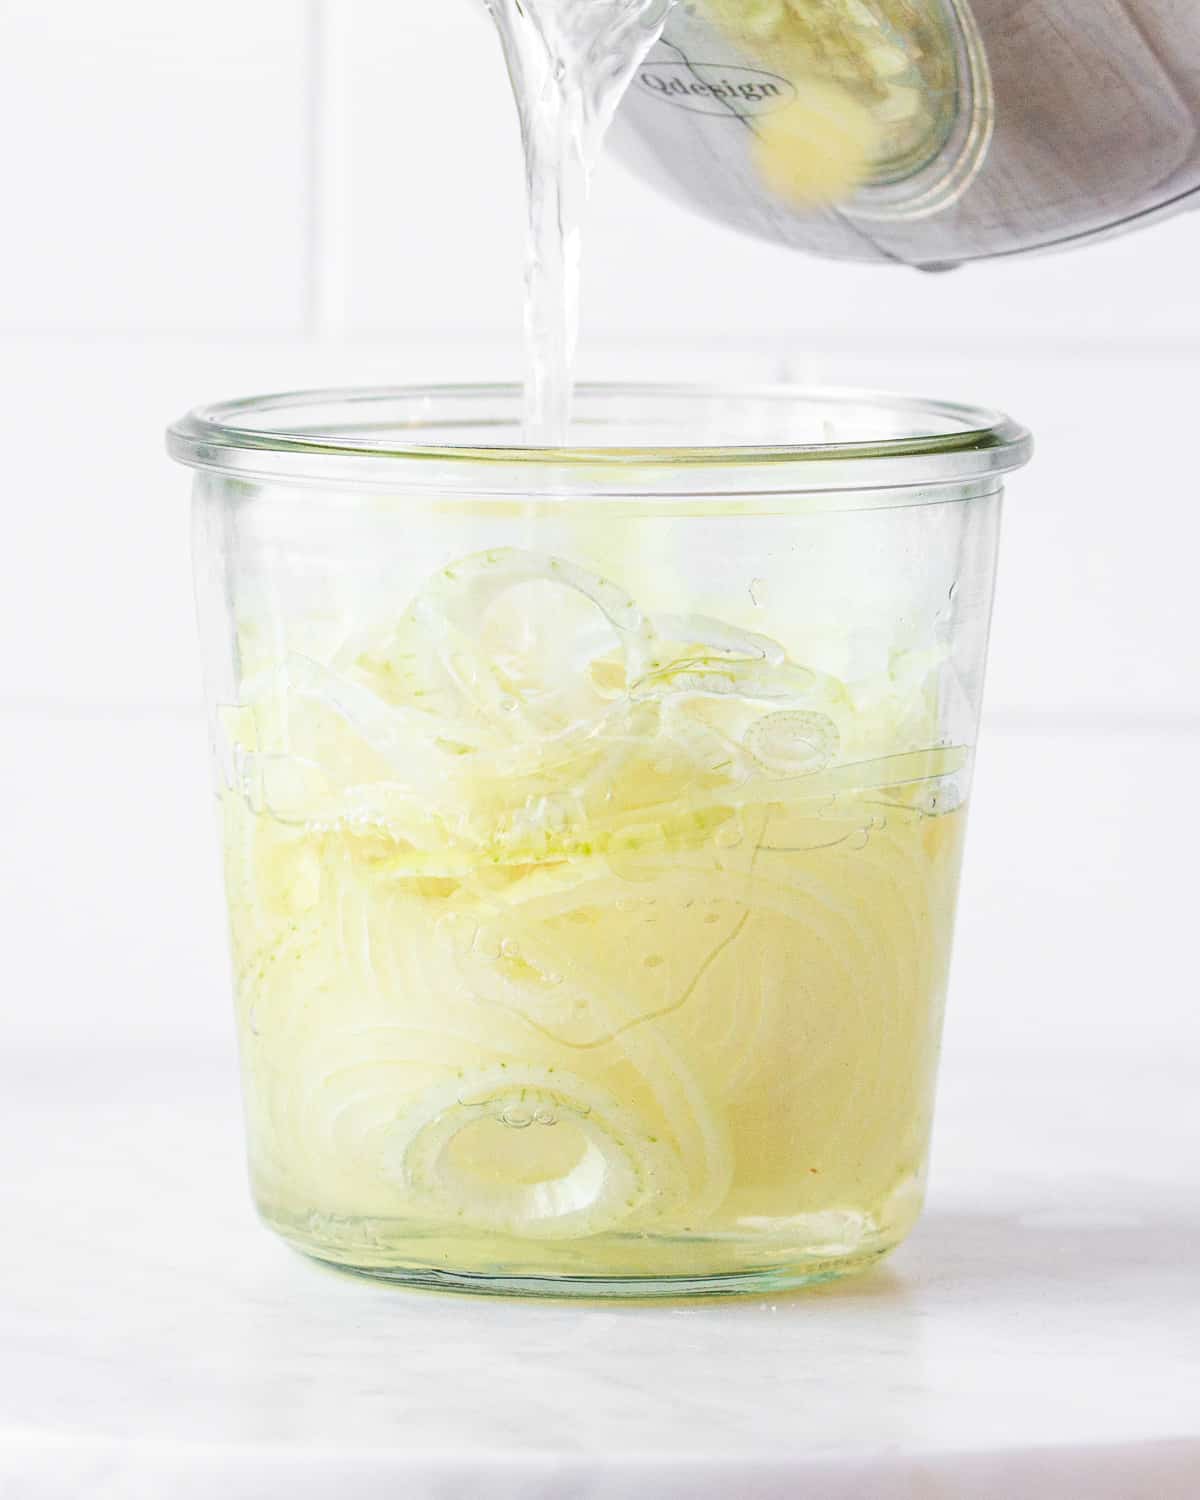 Sliced yellow onions in a white wine vinegar brine in a glass jar.